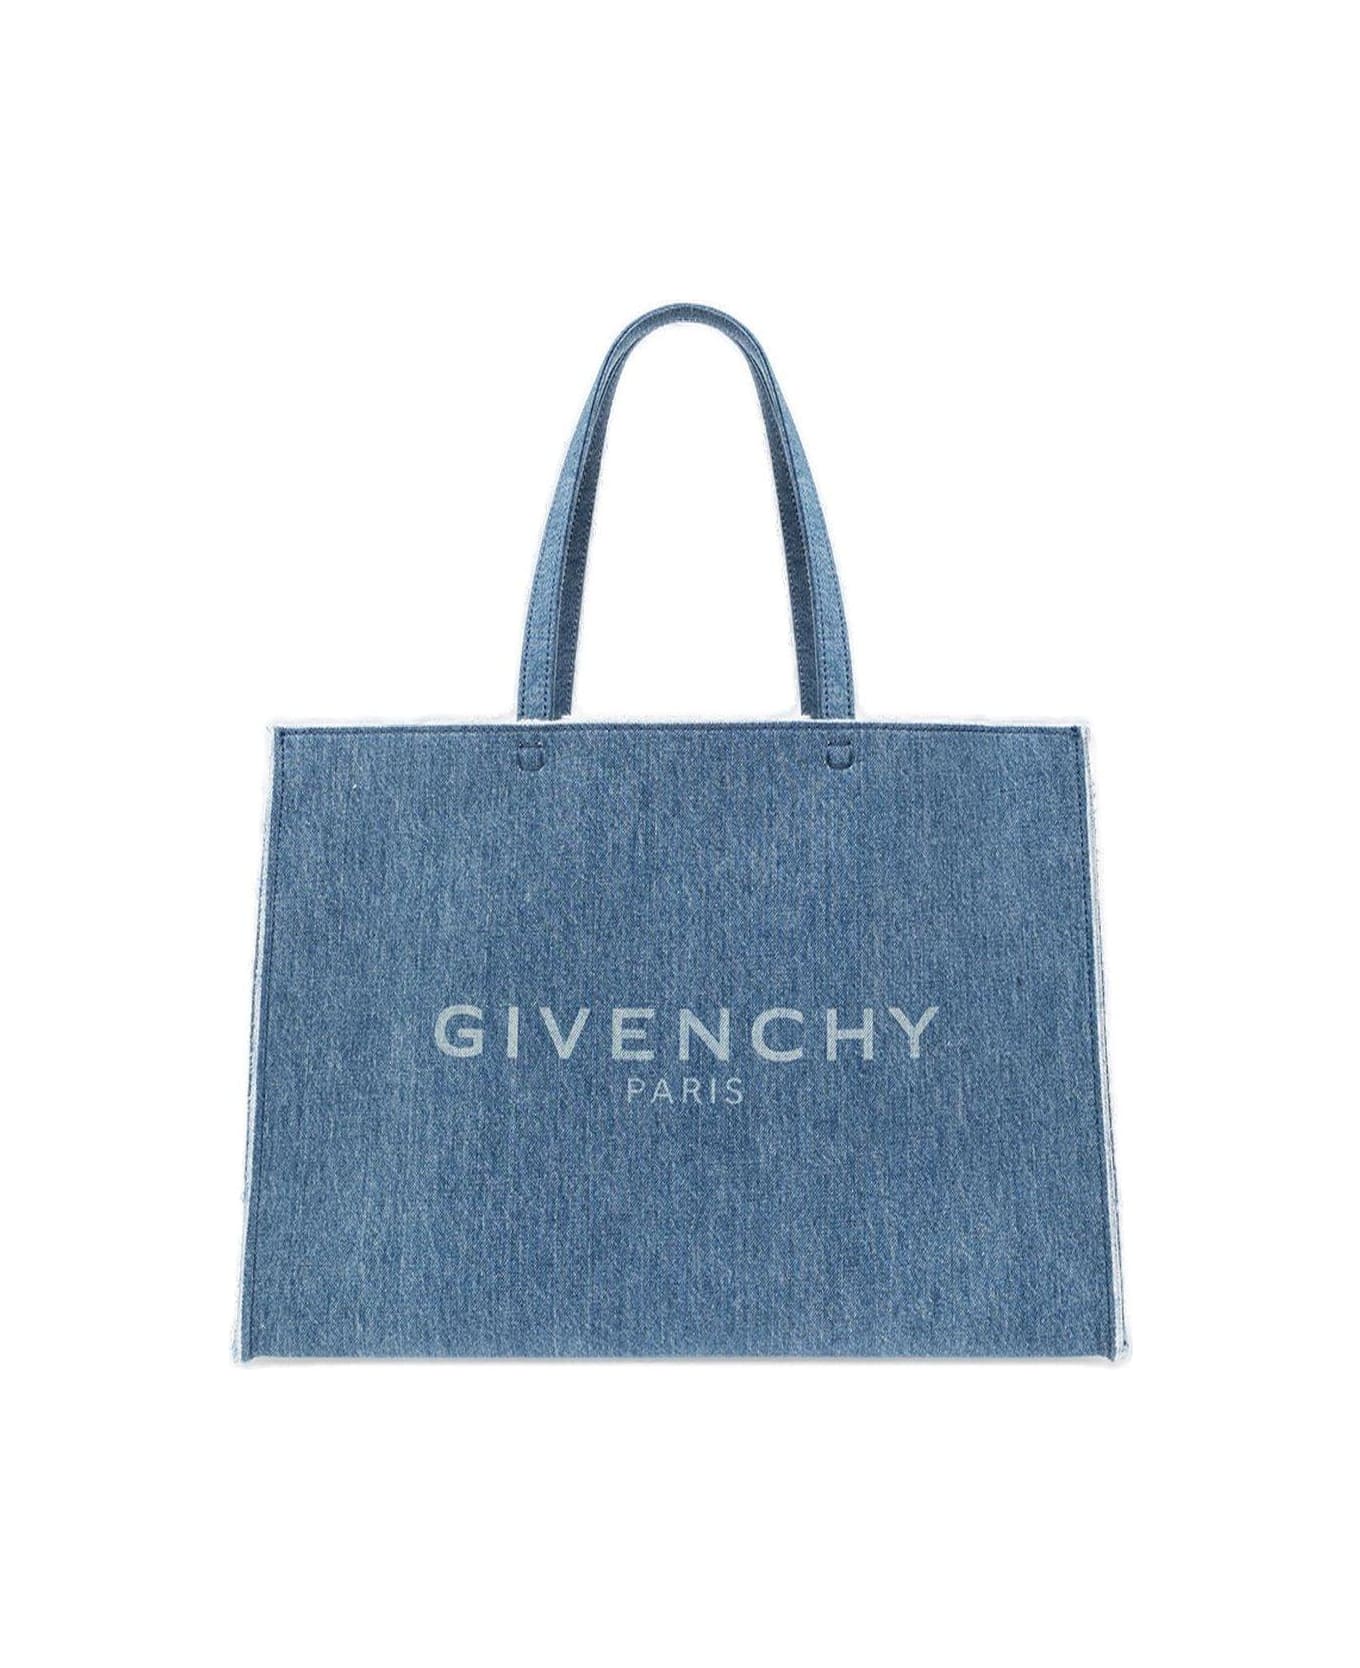 Givenchy G Tote Large Shopper Bag - Blue